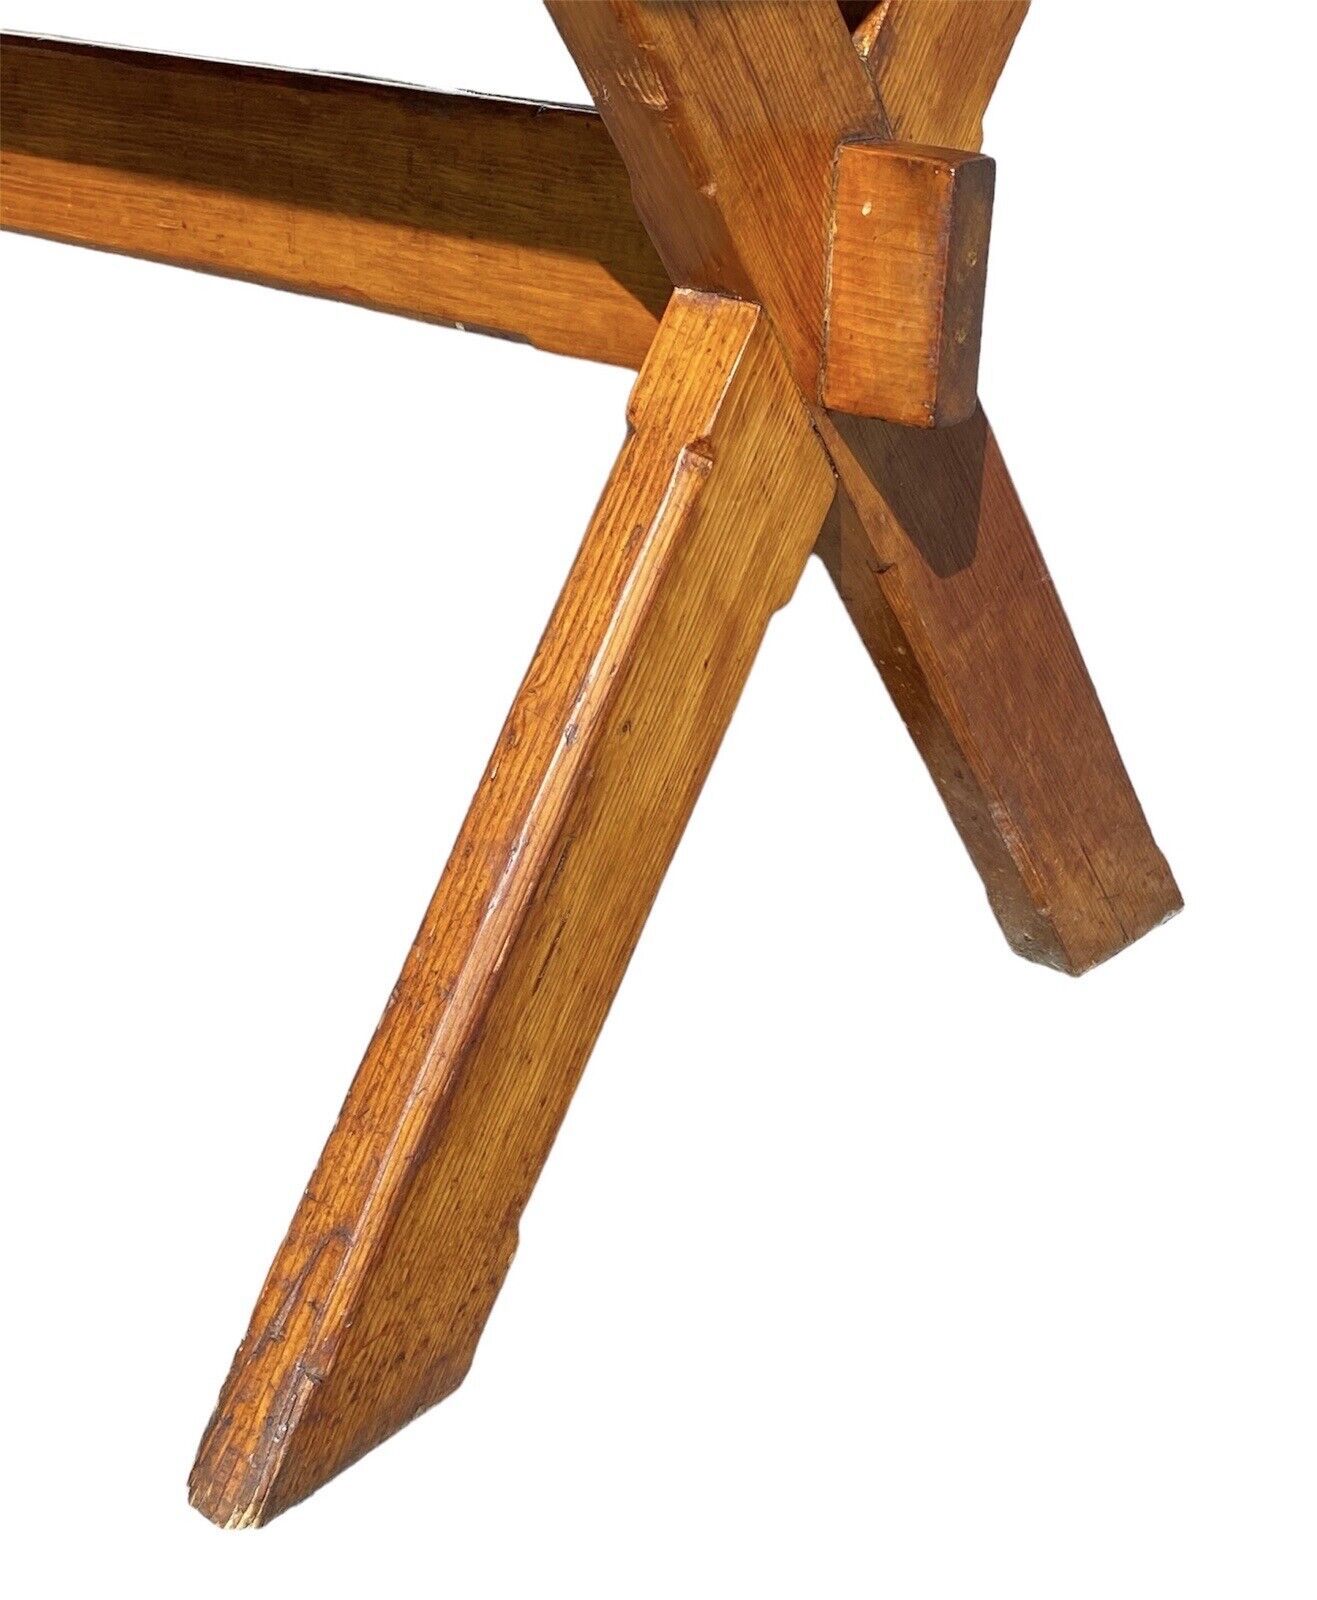 Vintage Farmhouse Style Pine Sawbuck Table / Primitive Dining Table